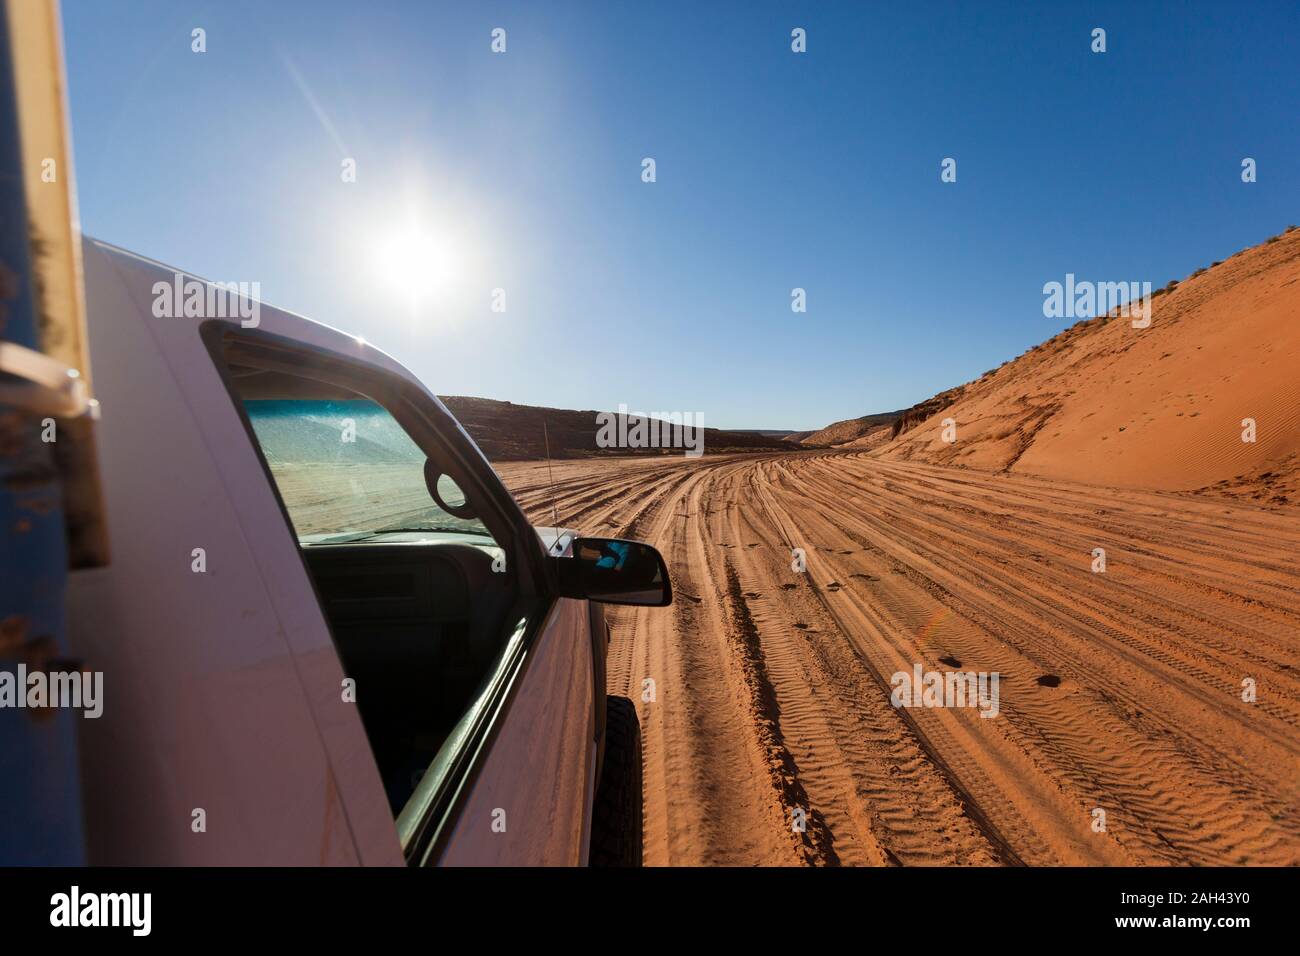 USA, Arizona, Car on desert road Stock Photo